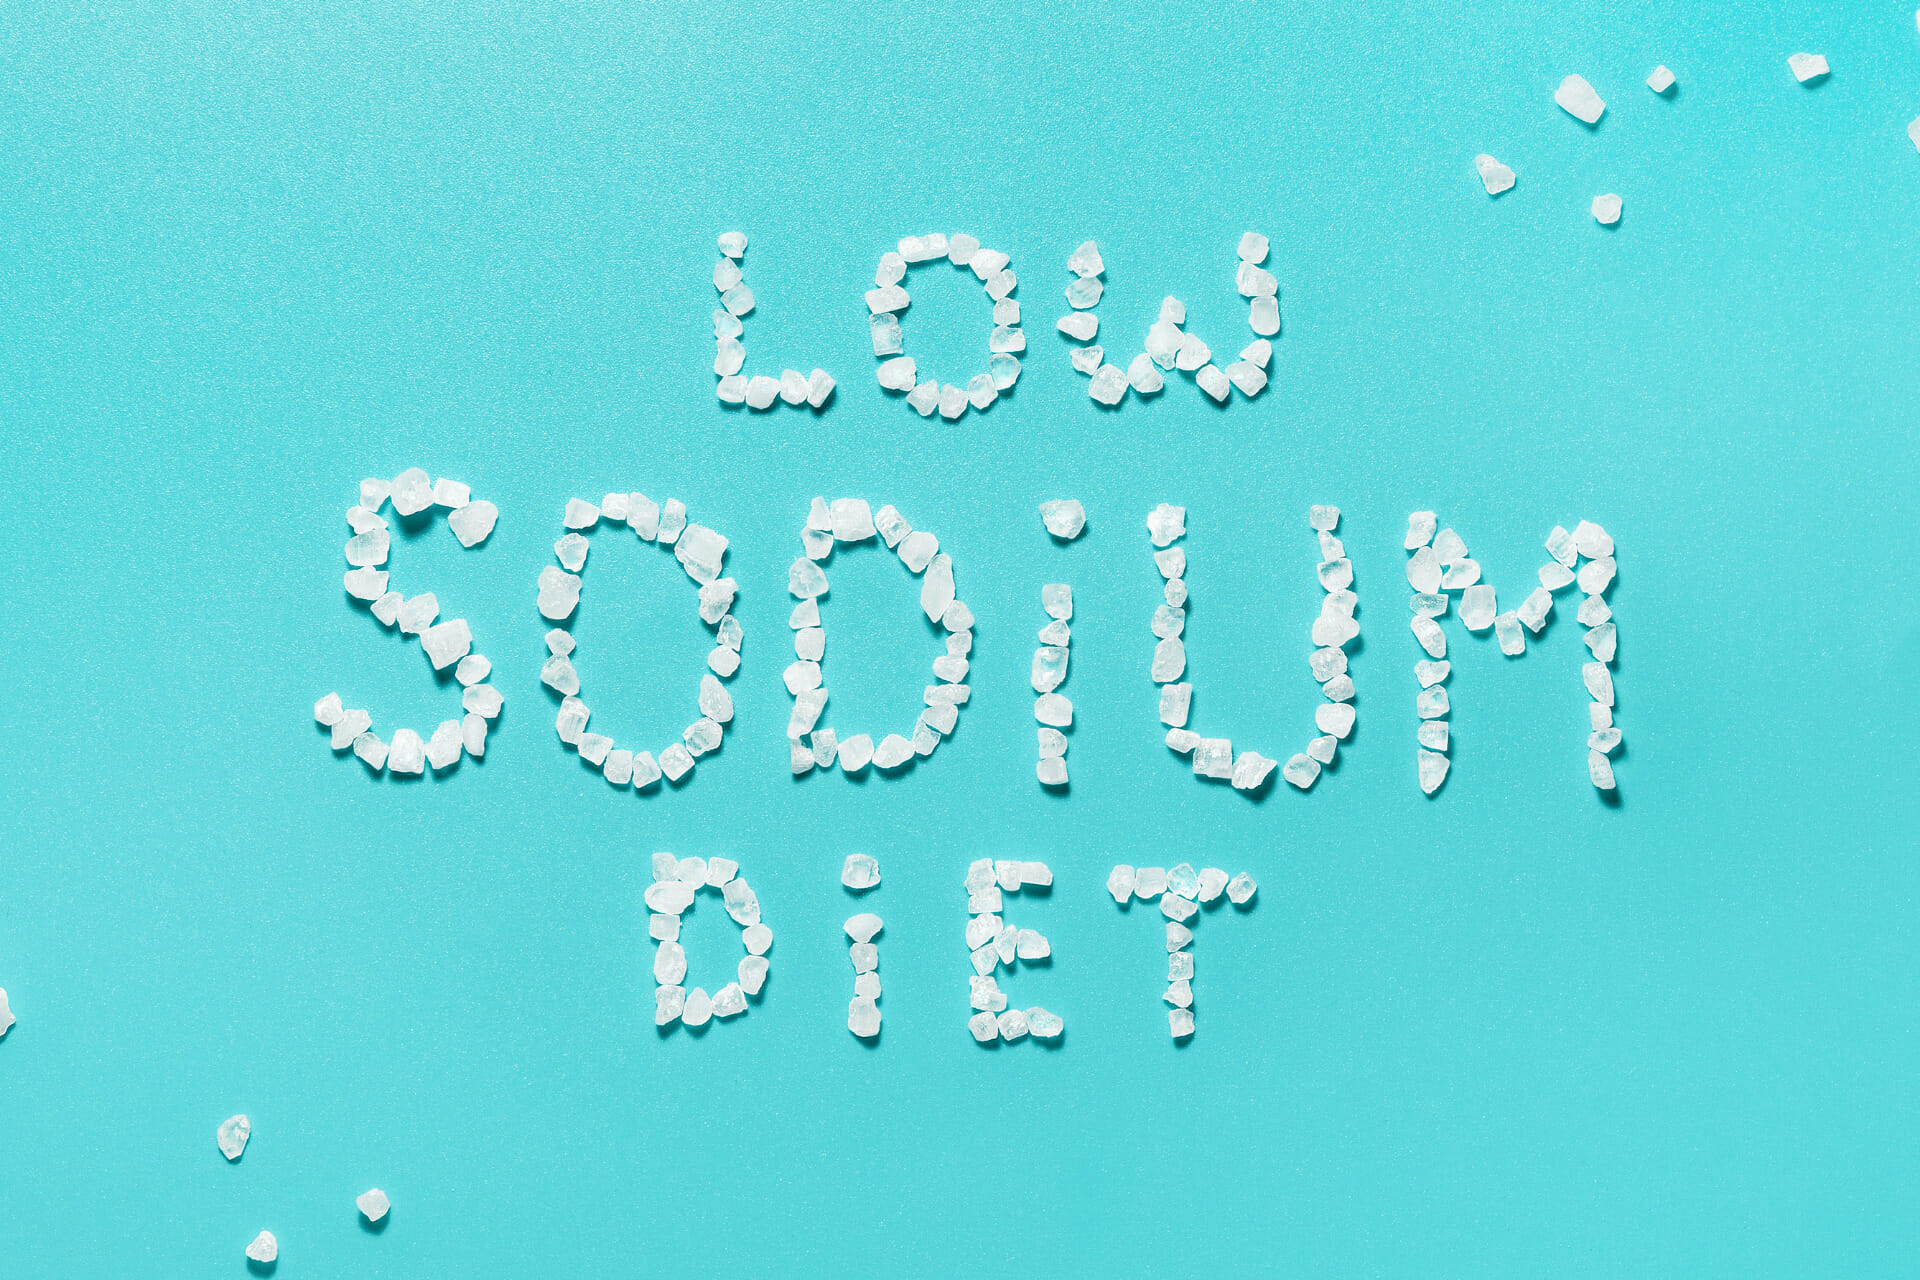 Can Salt Substitutes Lower Sodium Intake?